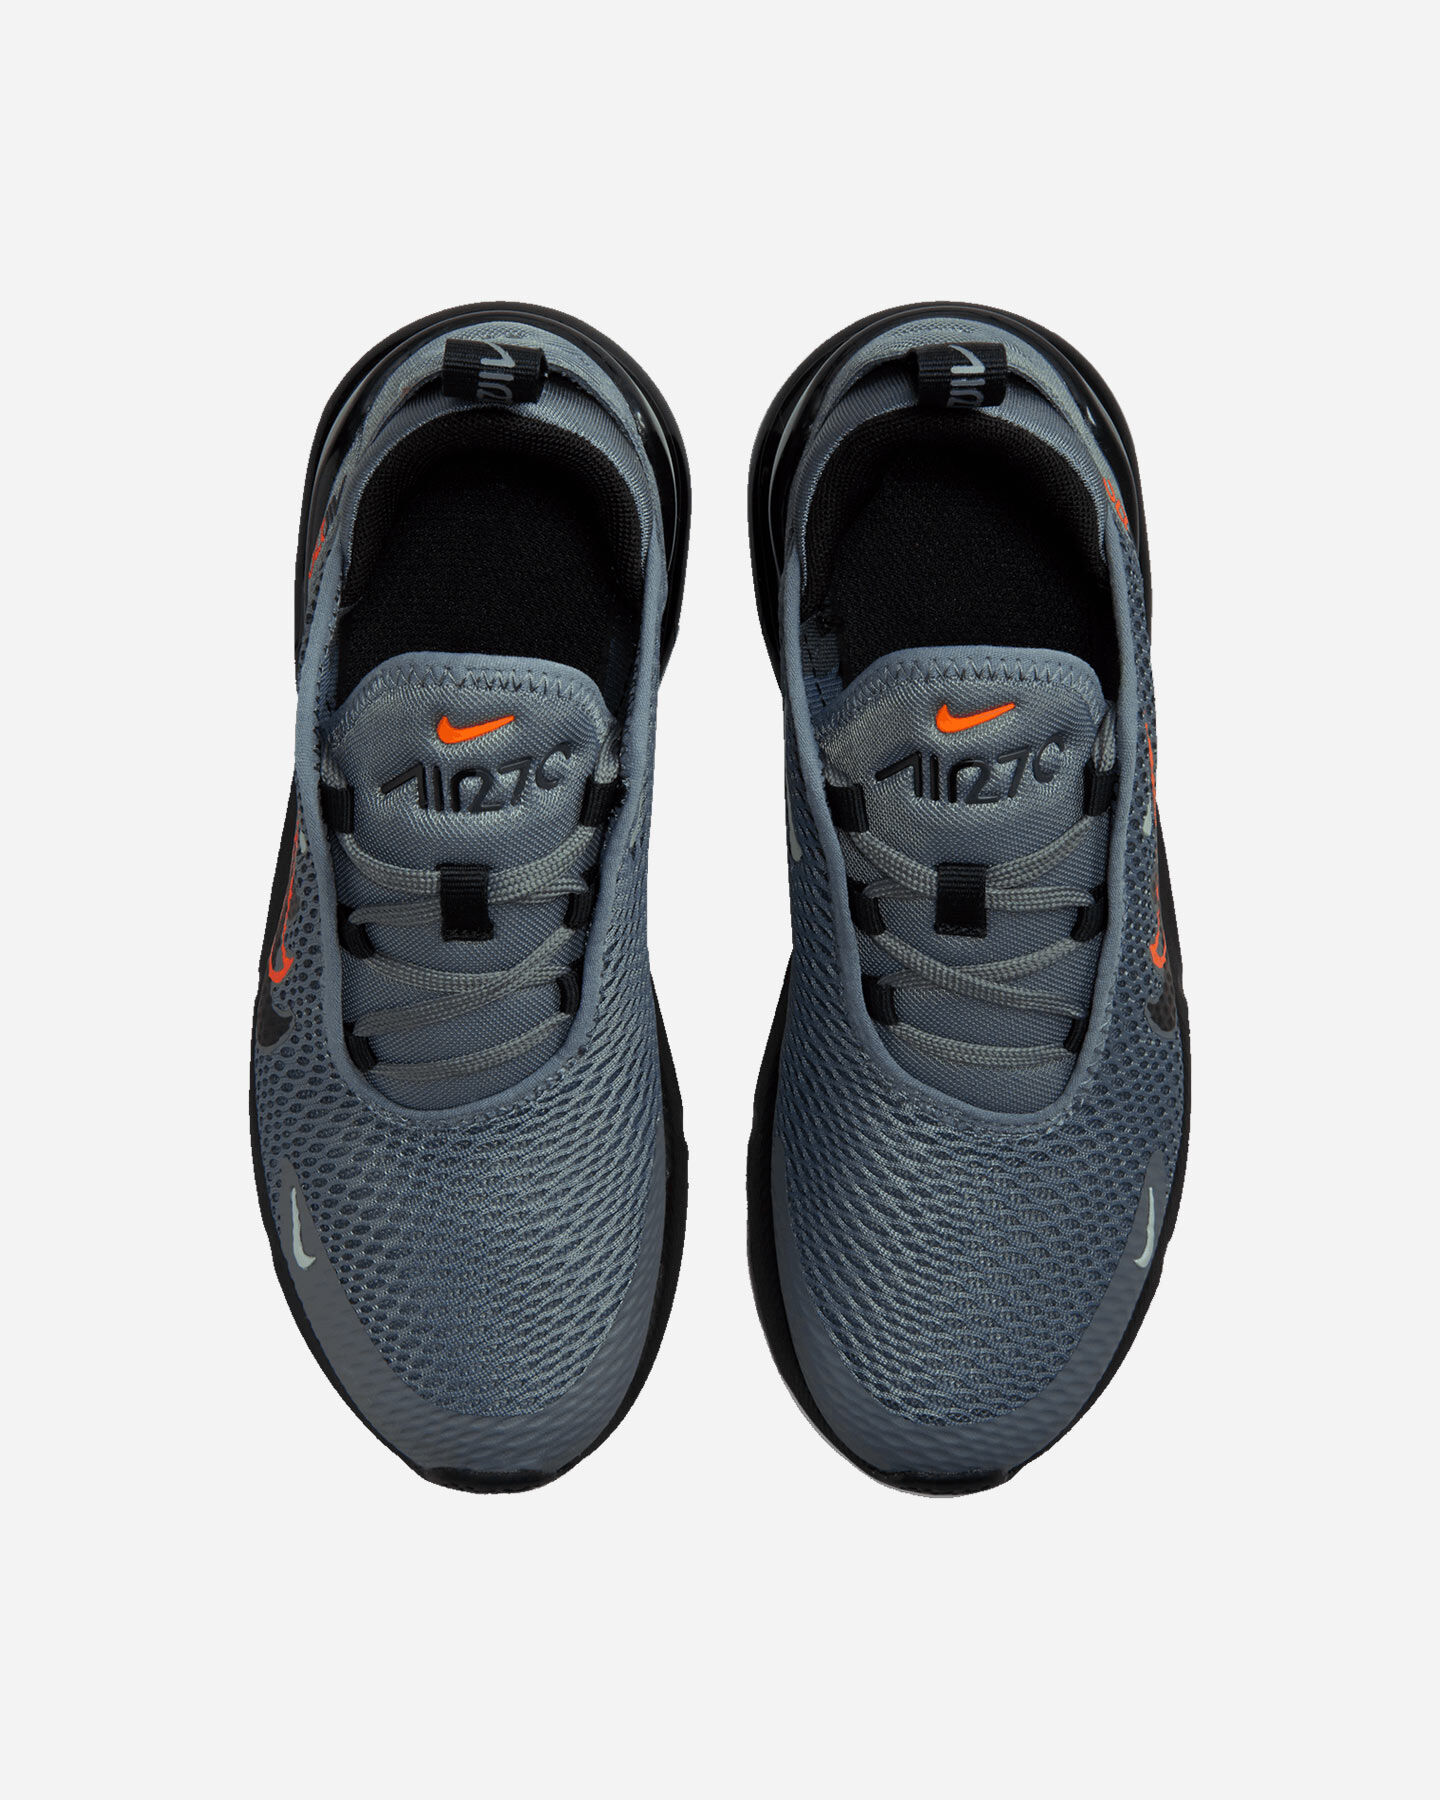  Scarpe sneakers NIKE AIR MAX 270 PS JR S5599902|001|12.5C scatto 3